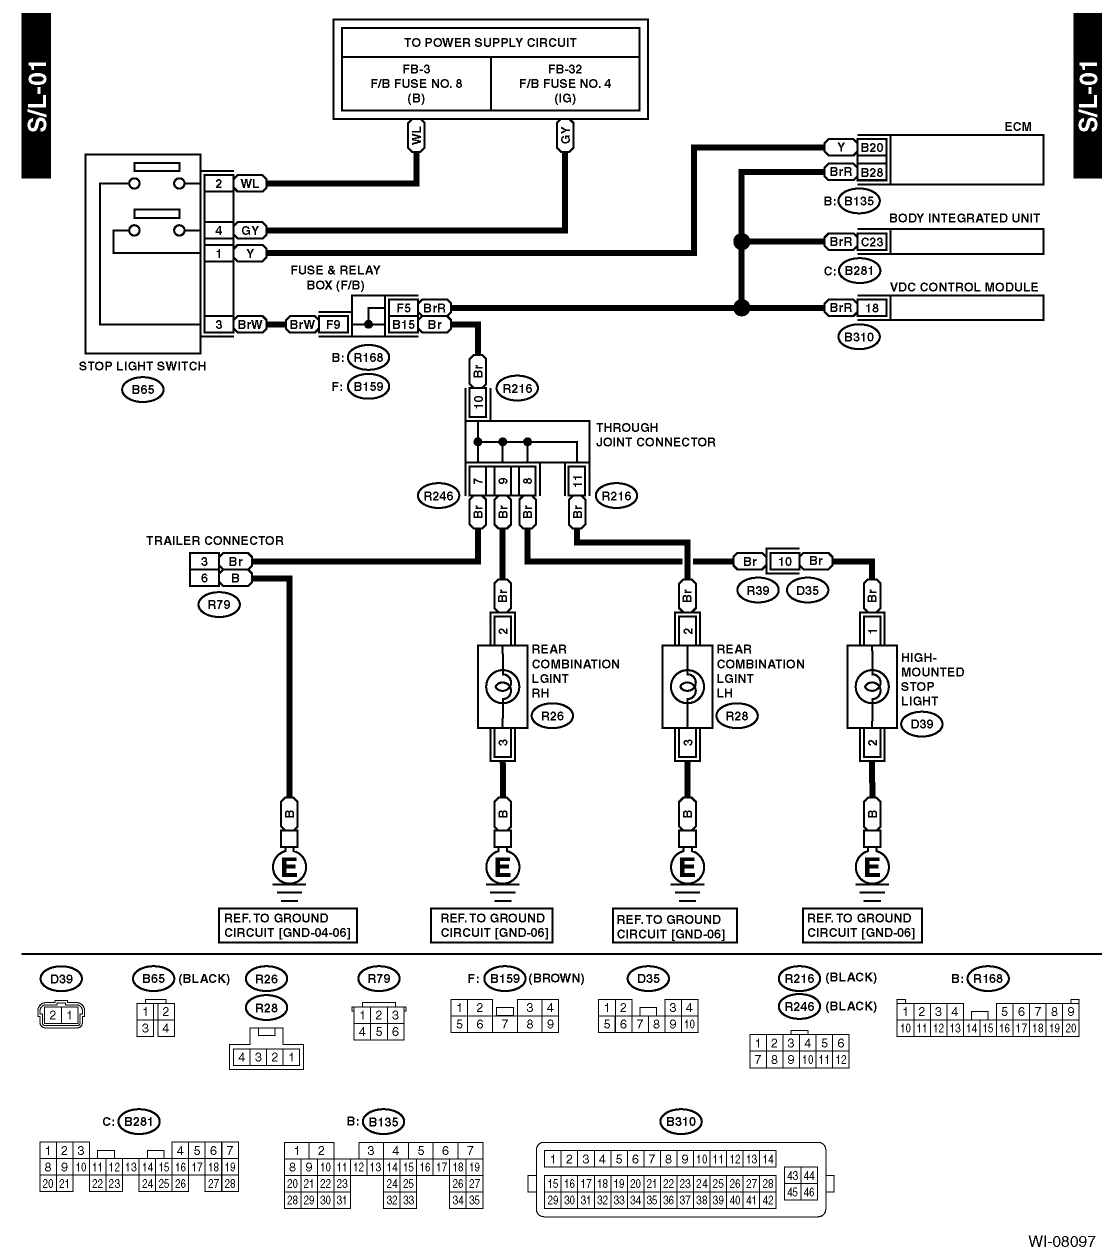 1996 Subaru Outback Fuse Box Location - Wiring Diagram Schema